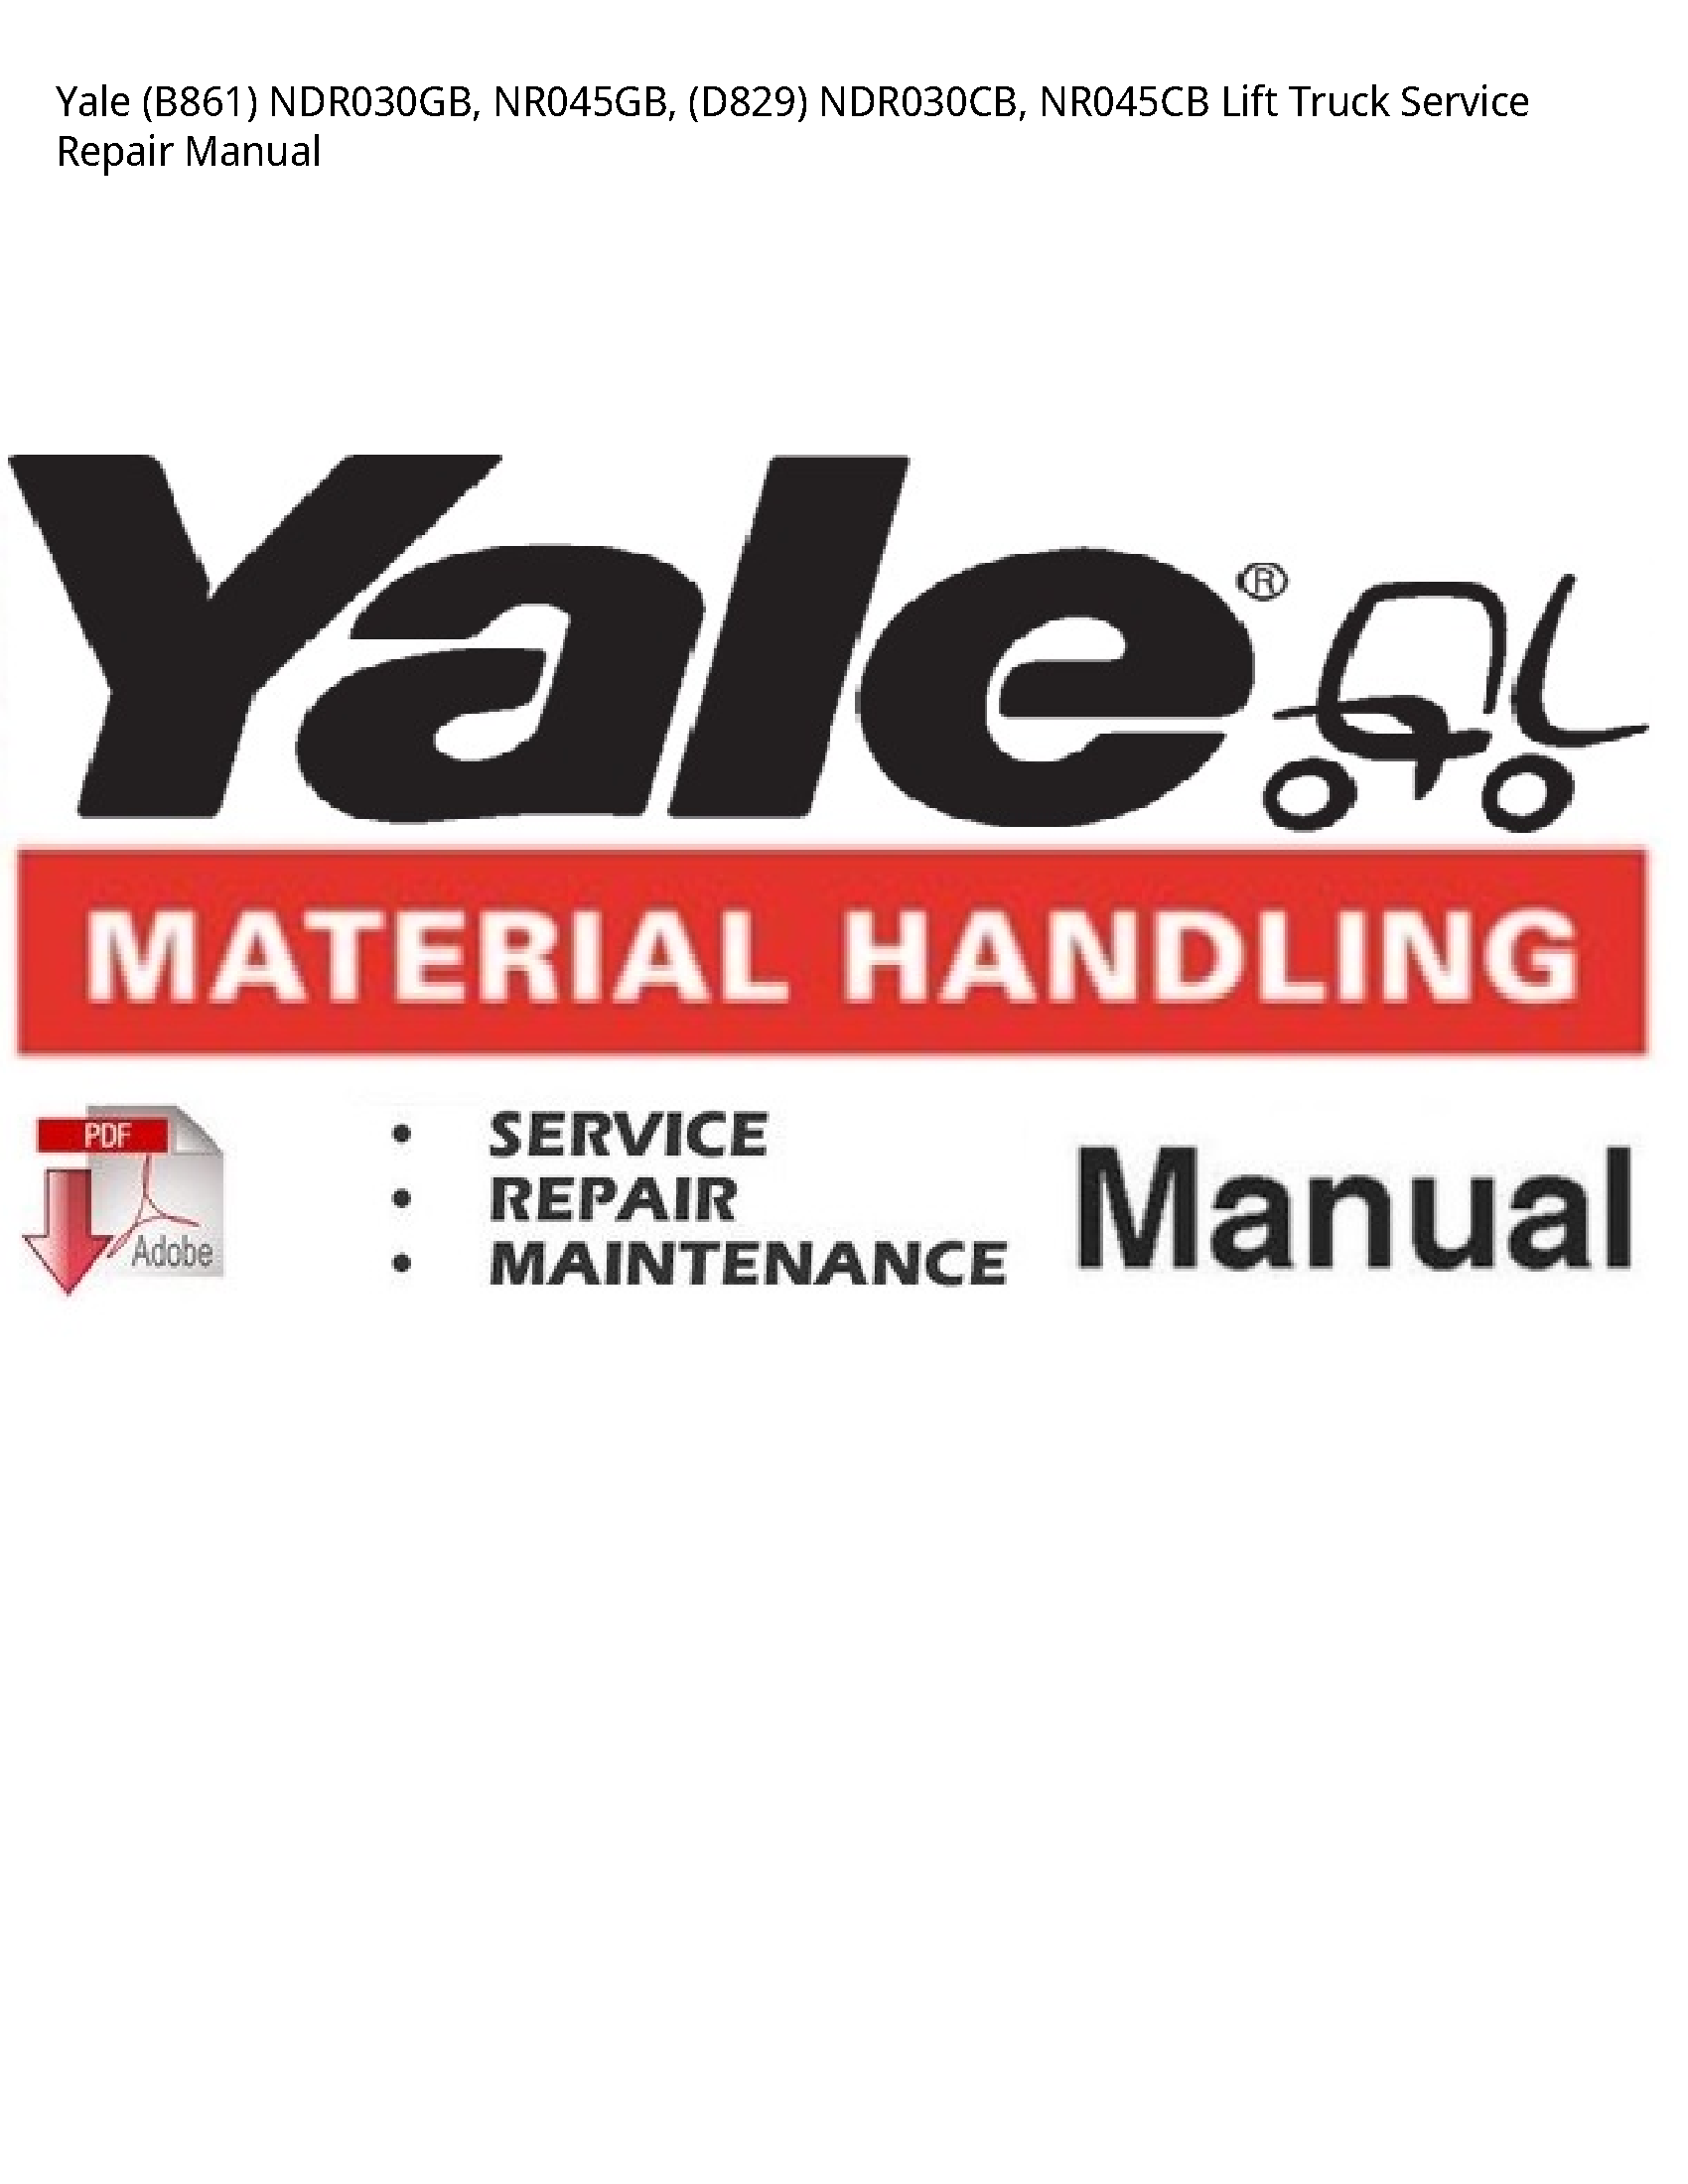 Yale (B861) Lift Truck manual